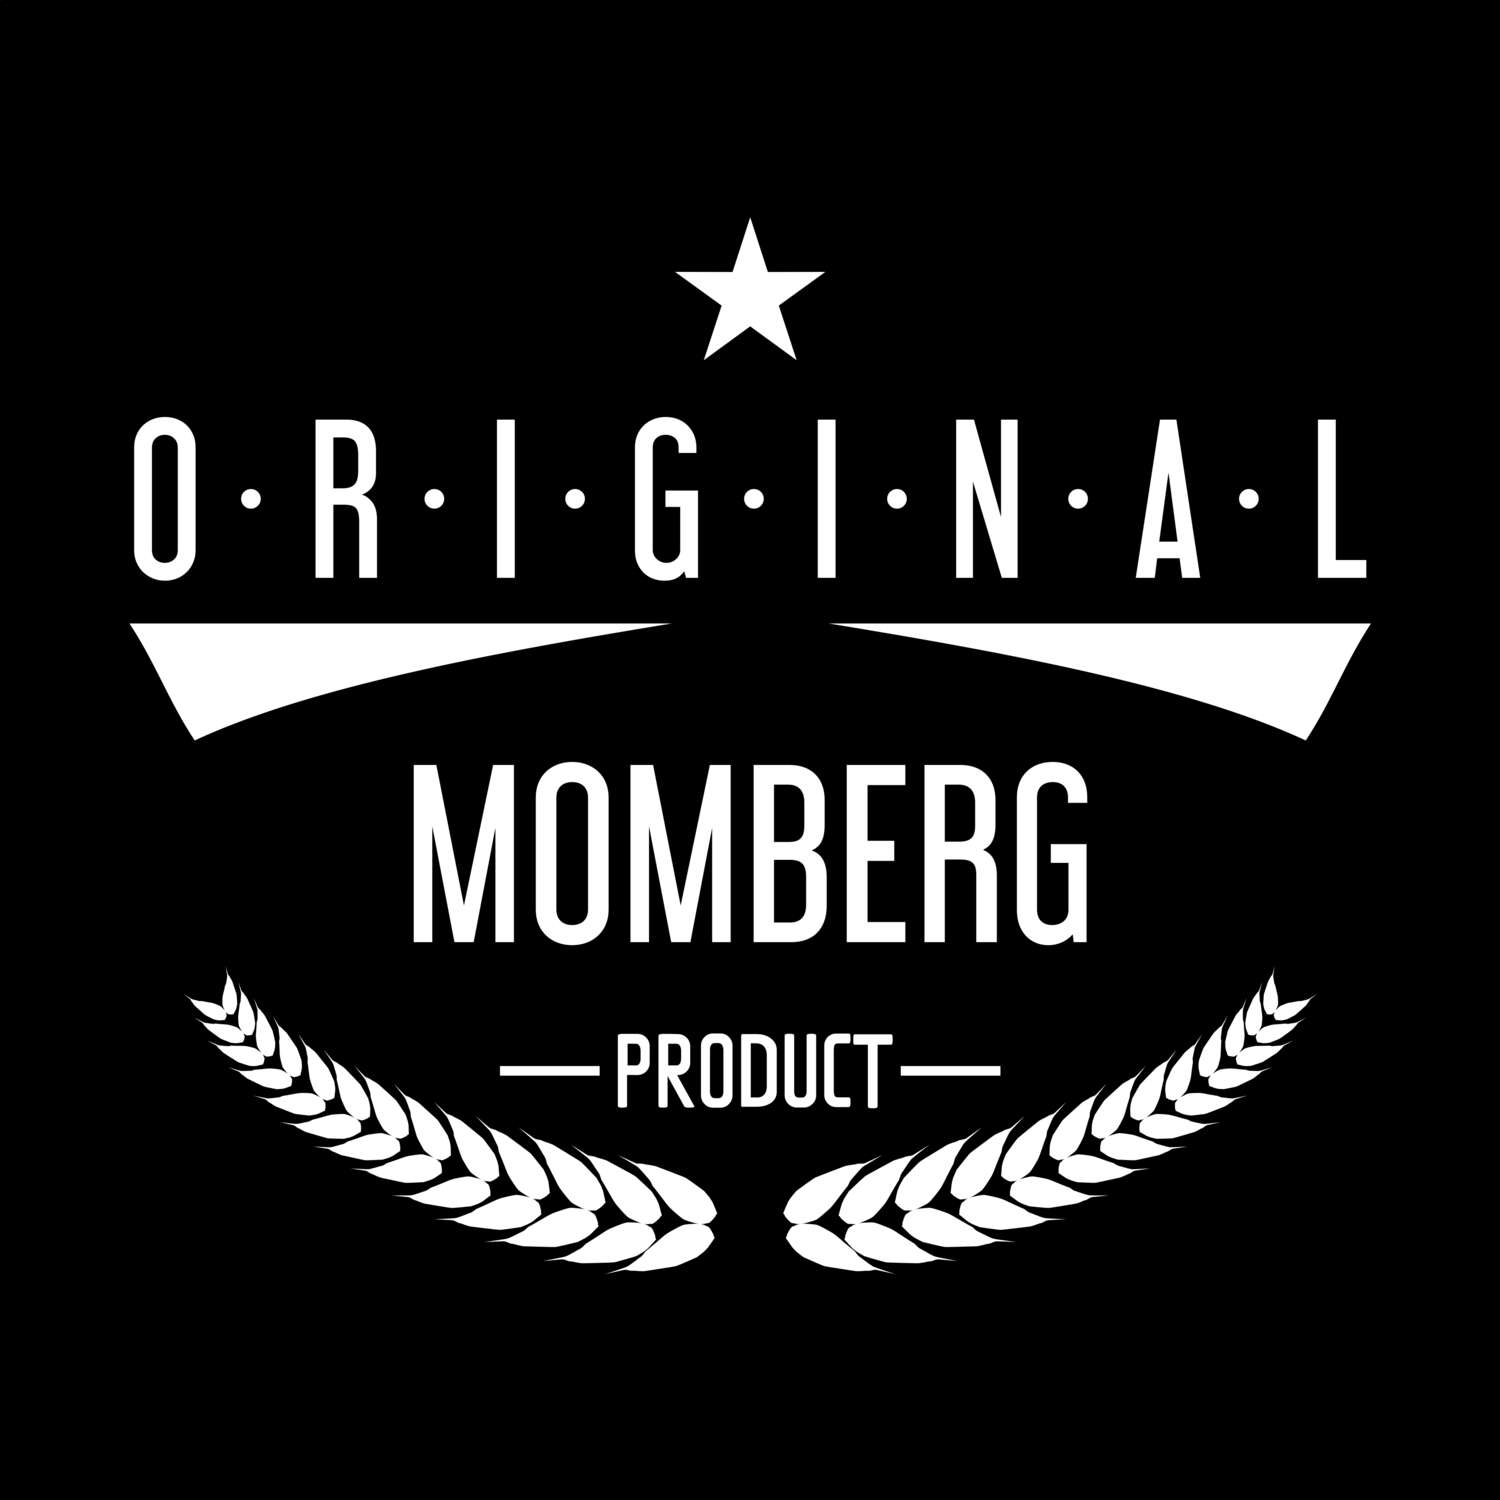 Momberg T-Shirt »Original Product«